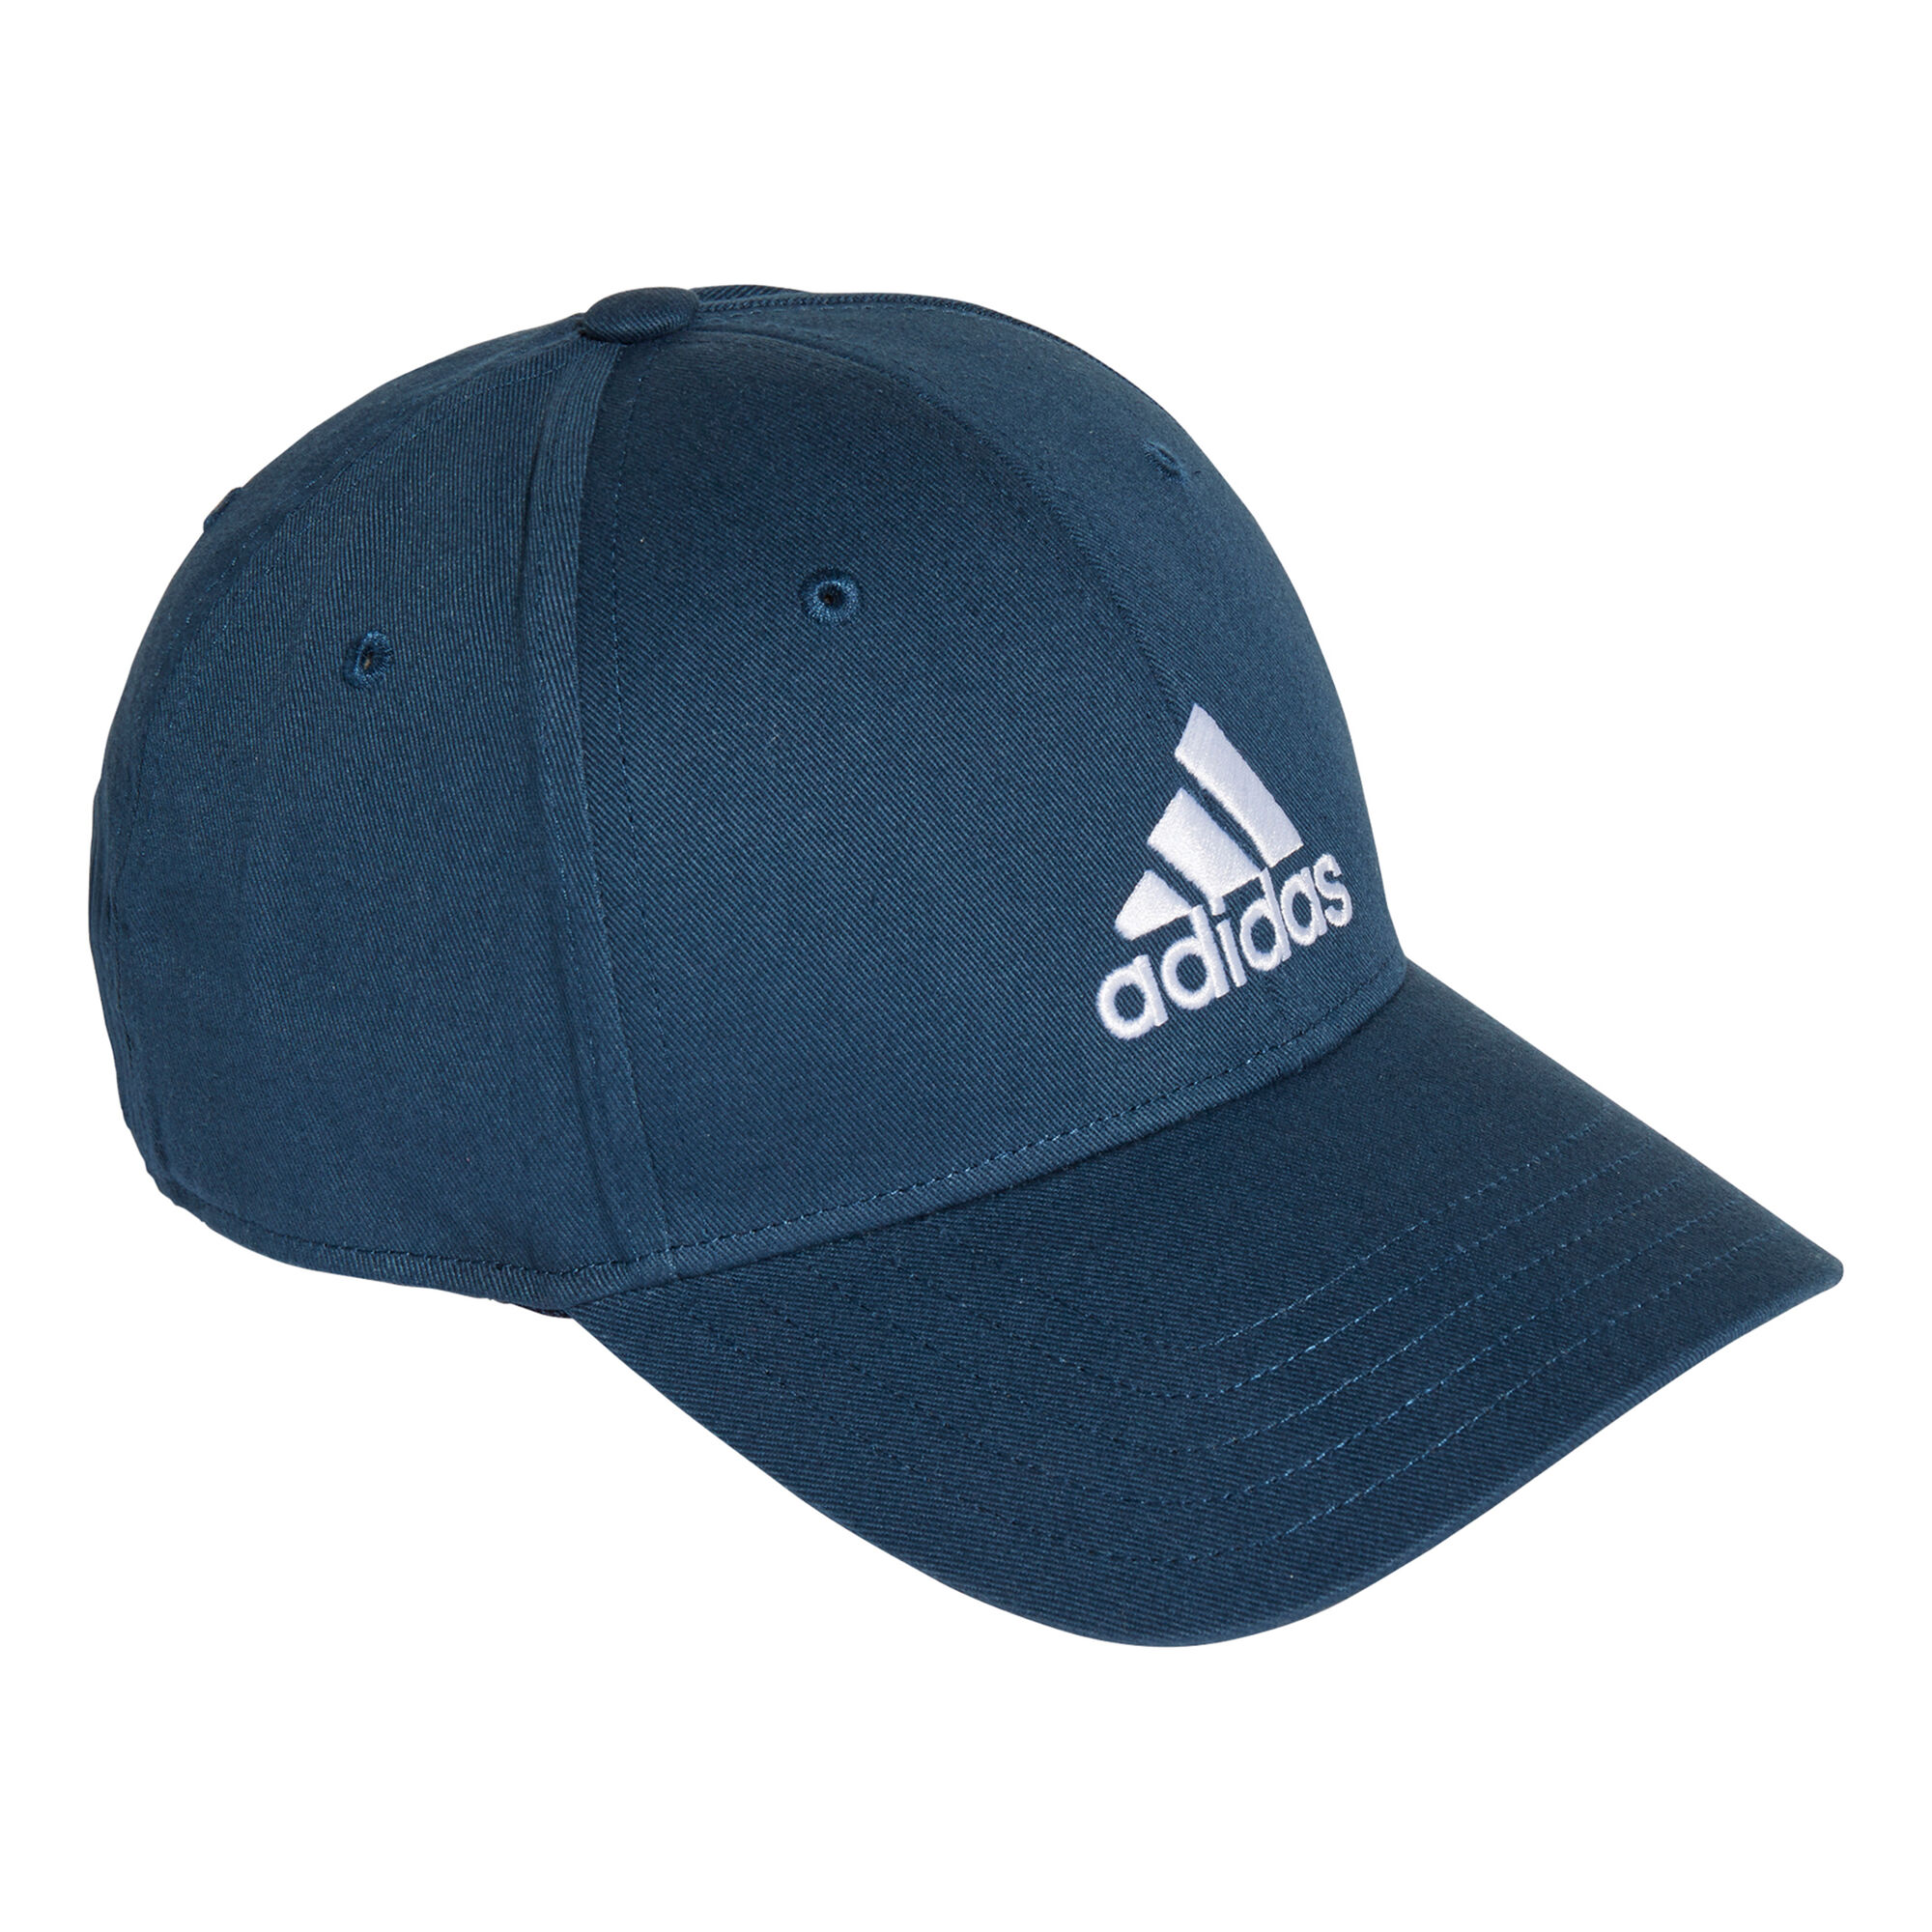 buy adidas Baseball Cap - Dark Blue, White online | Tennis-Point